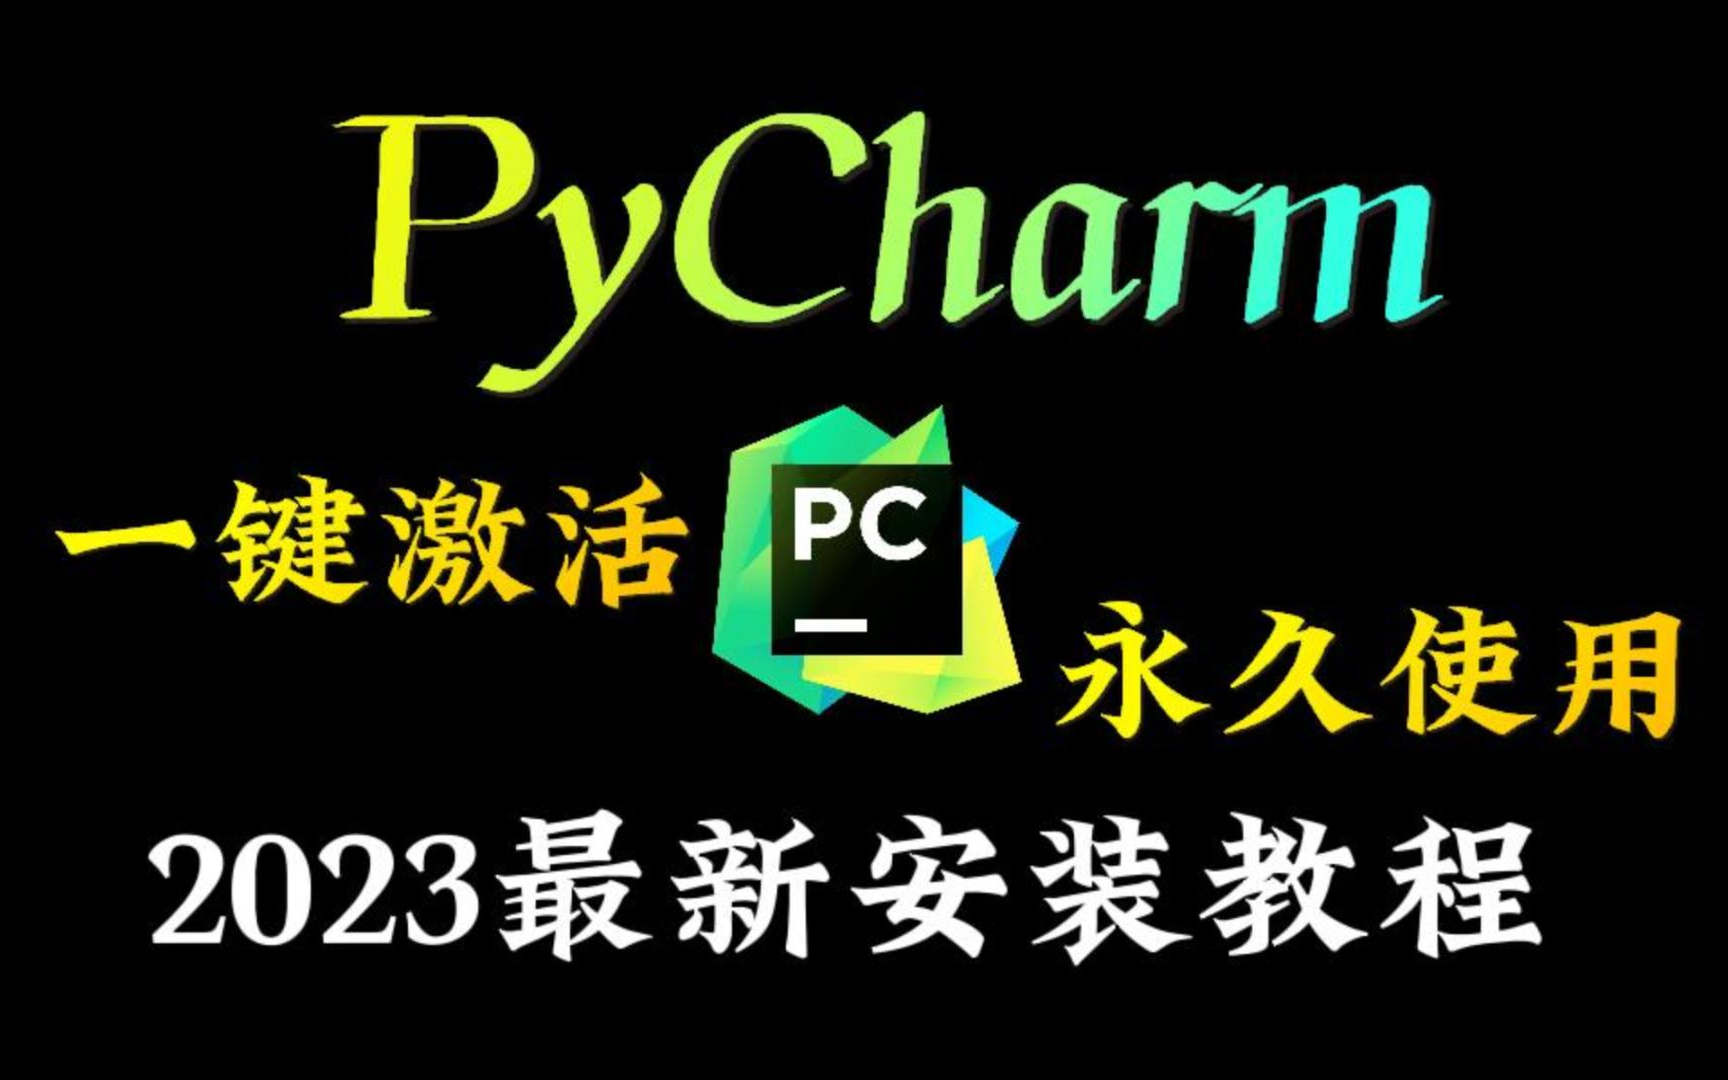 【Python安装】PyCharm专业版安装激活教程，提供激活码，可永久试用，三分钟教会你安装与环境配置，适合Python零基础小白